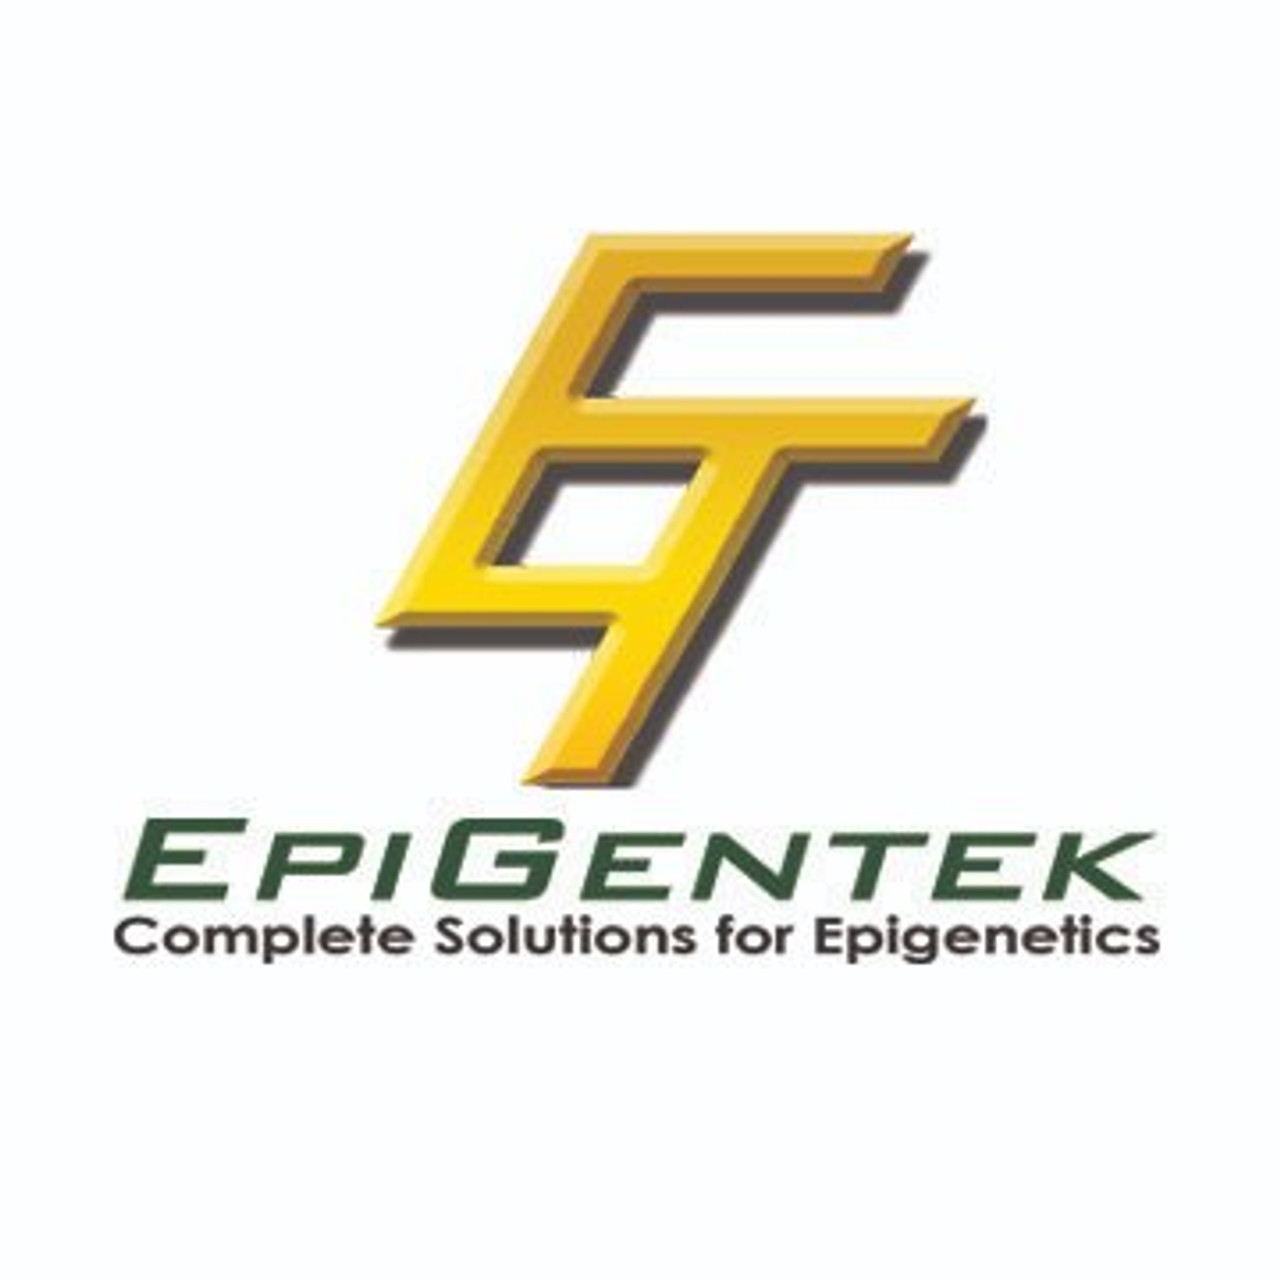 QuantiSir Specific Gene Knockdown Quantification Kit For Epigenetic Regulators - Dnmt2